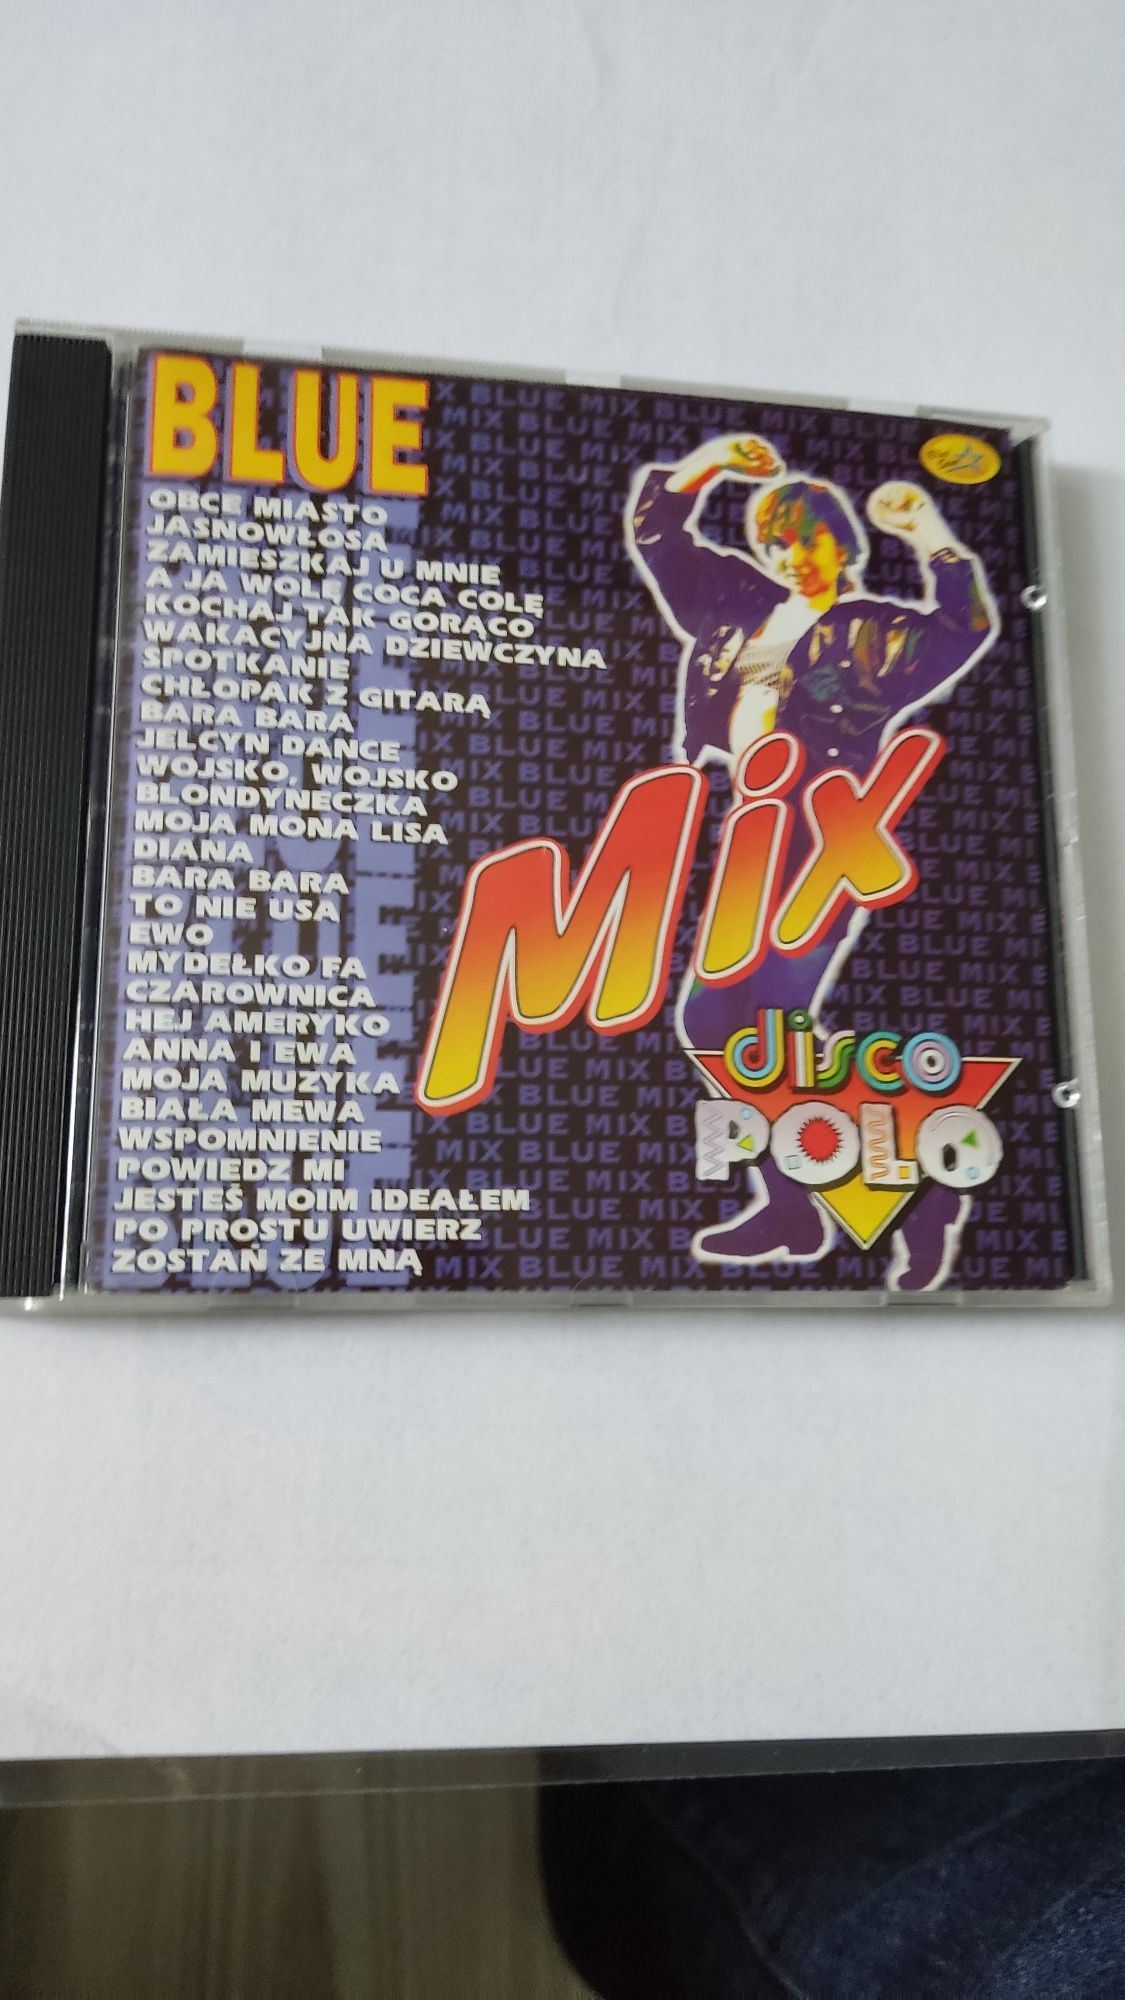 Blue Star Blue mix disco polo cd